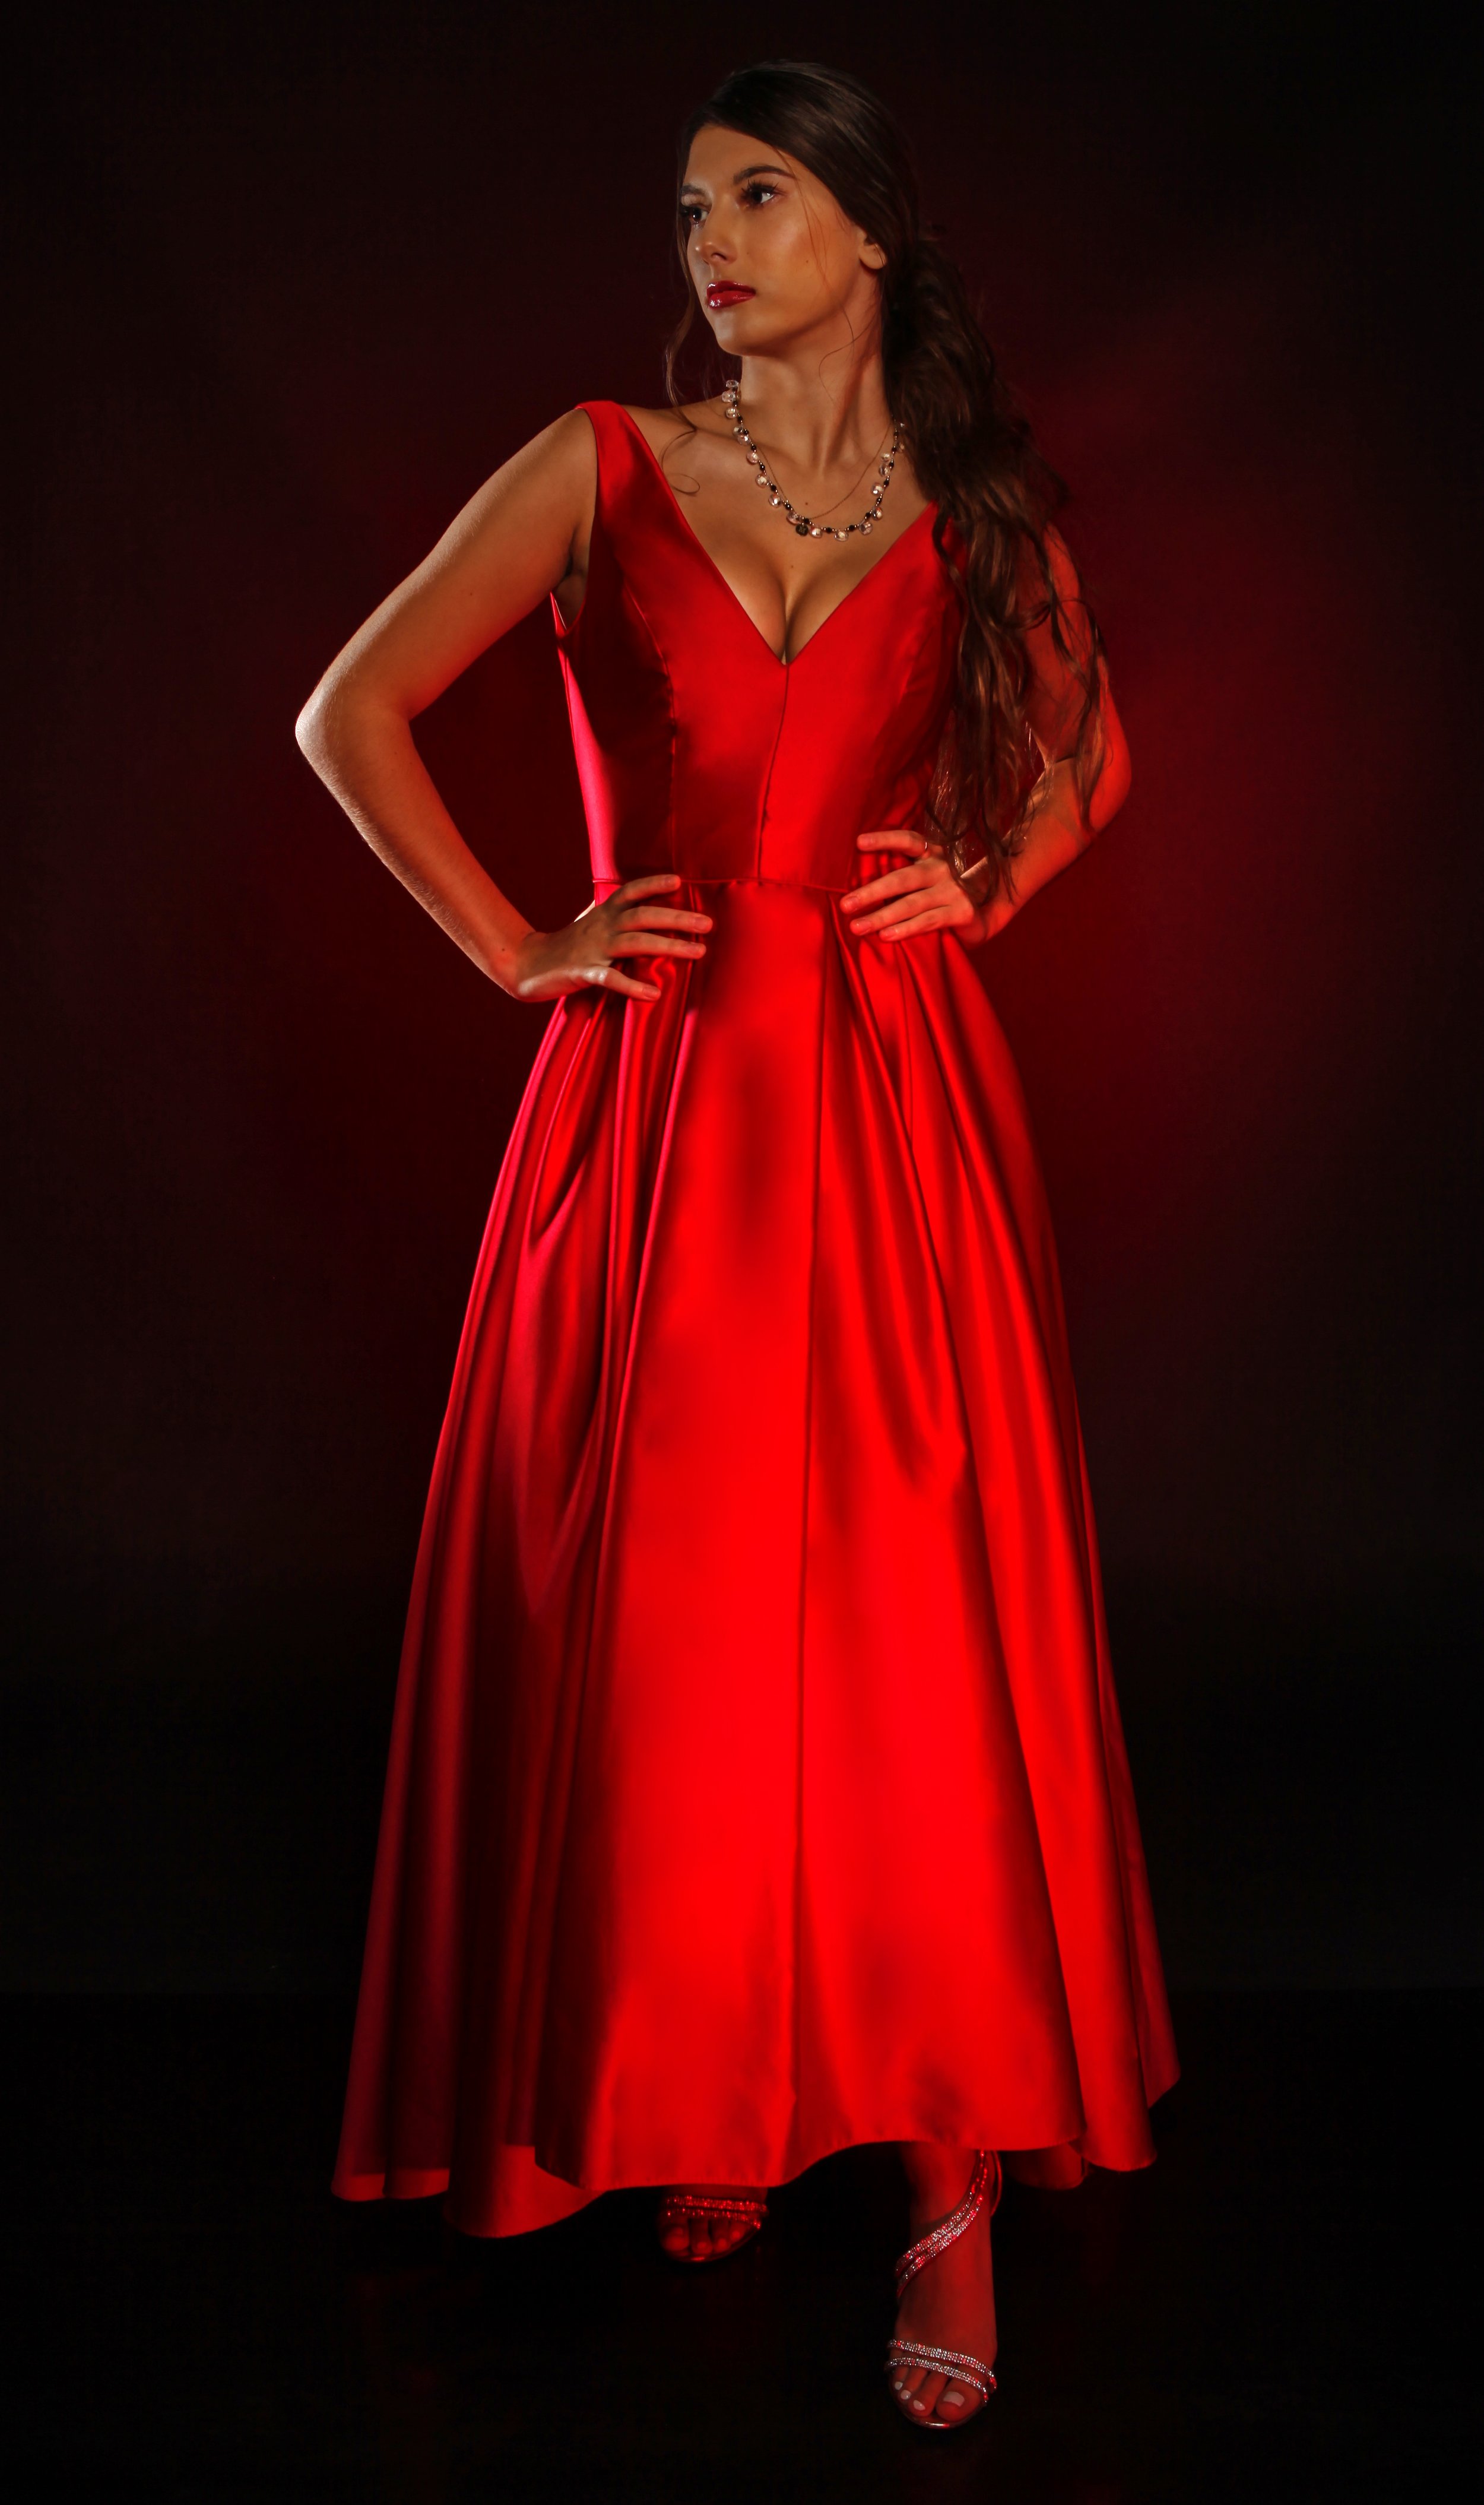 Model In Red Dress Standing_5128 copy.jpg